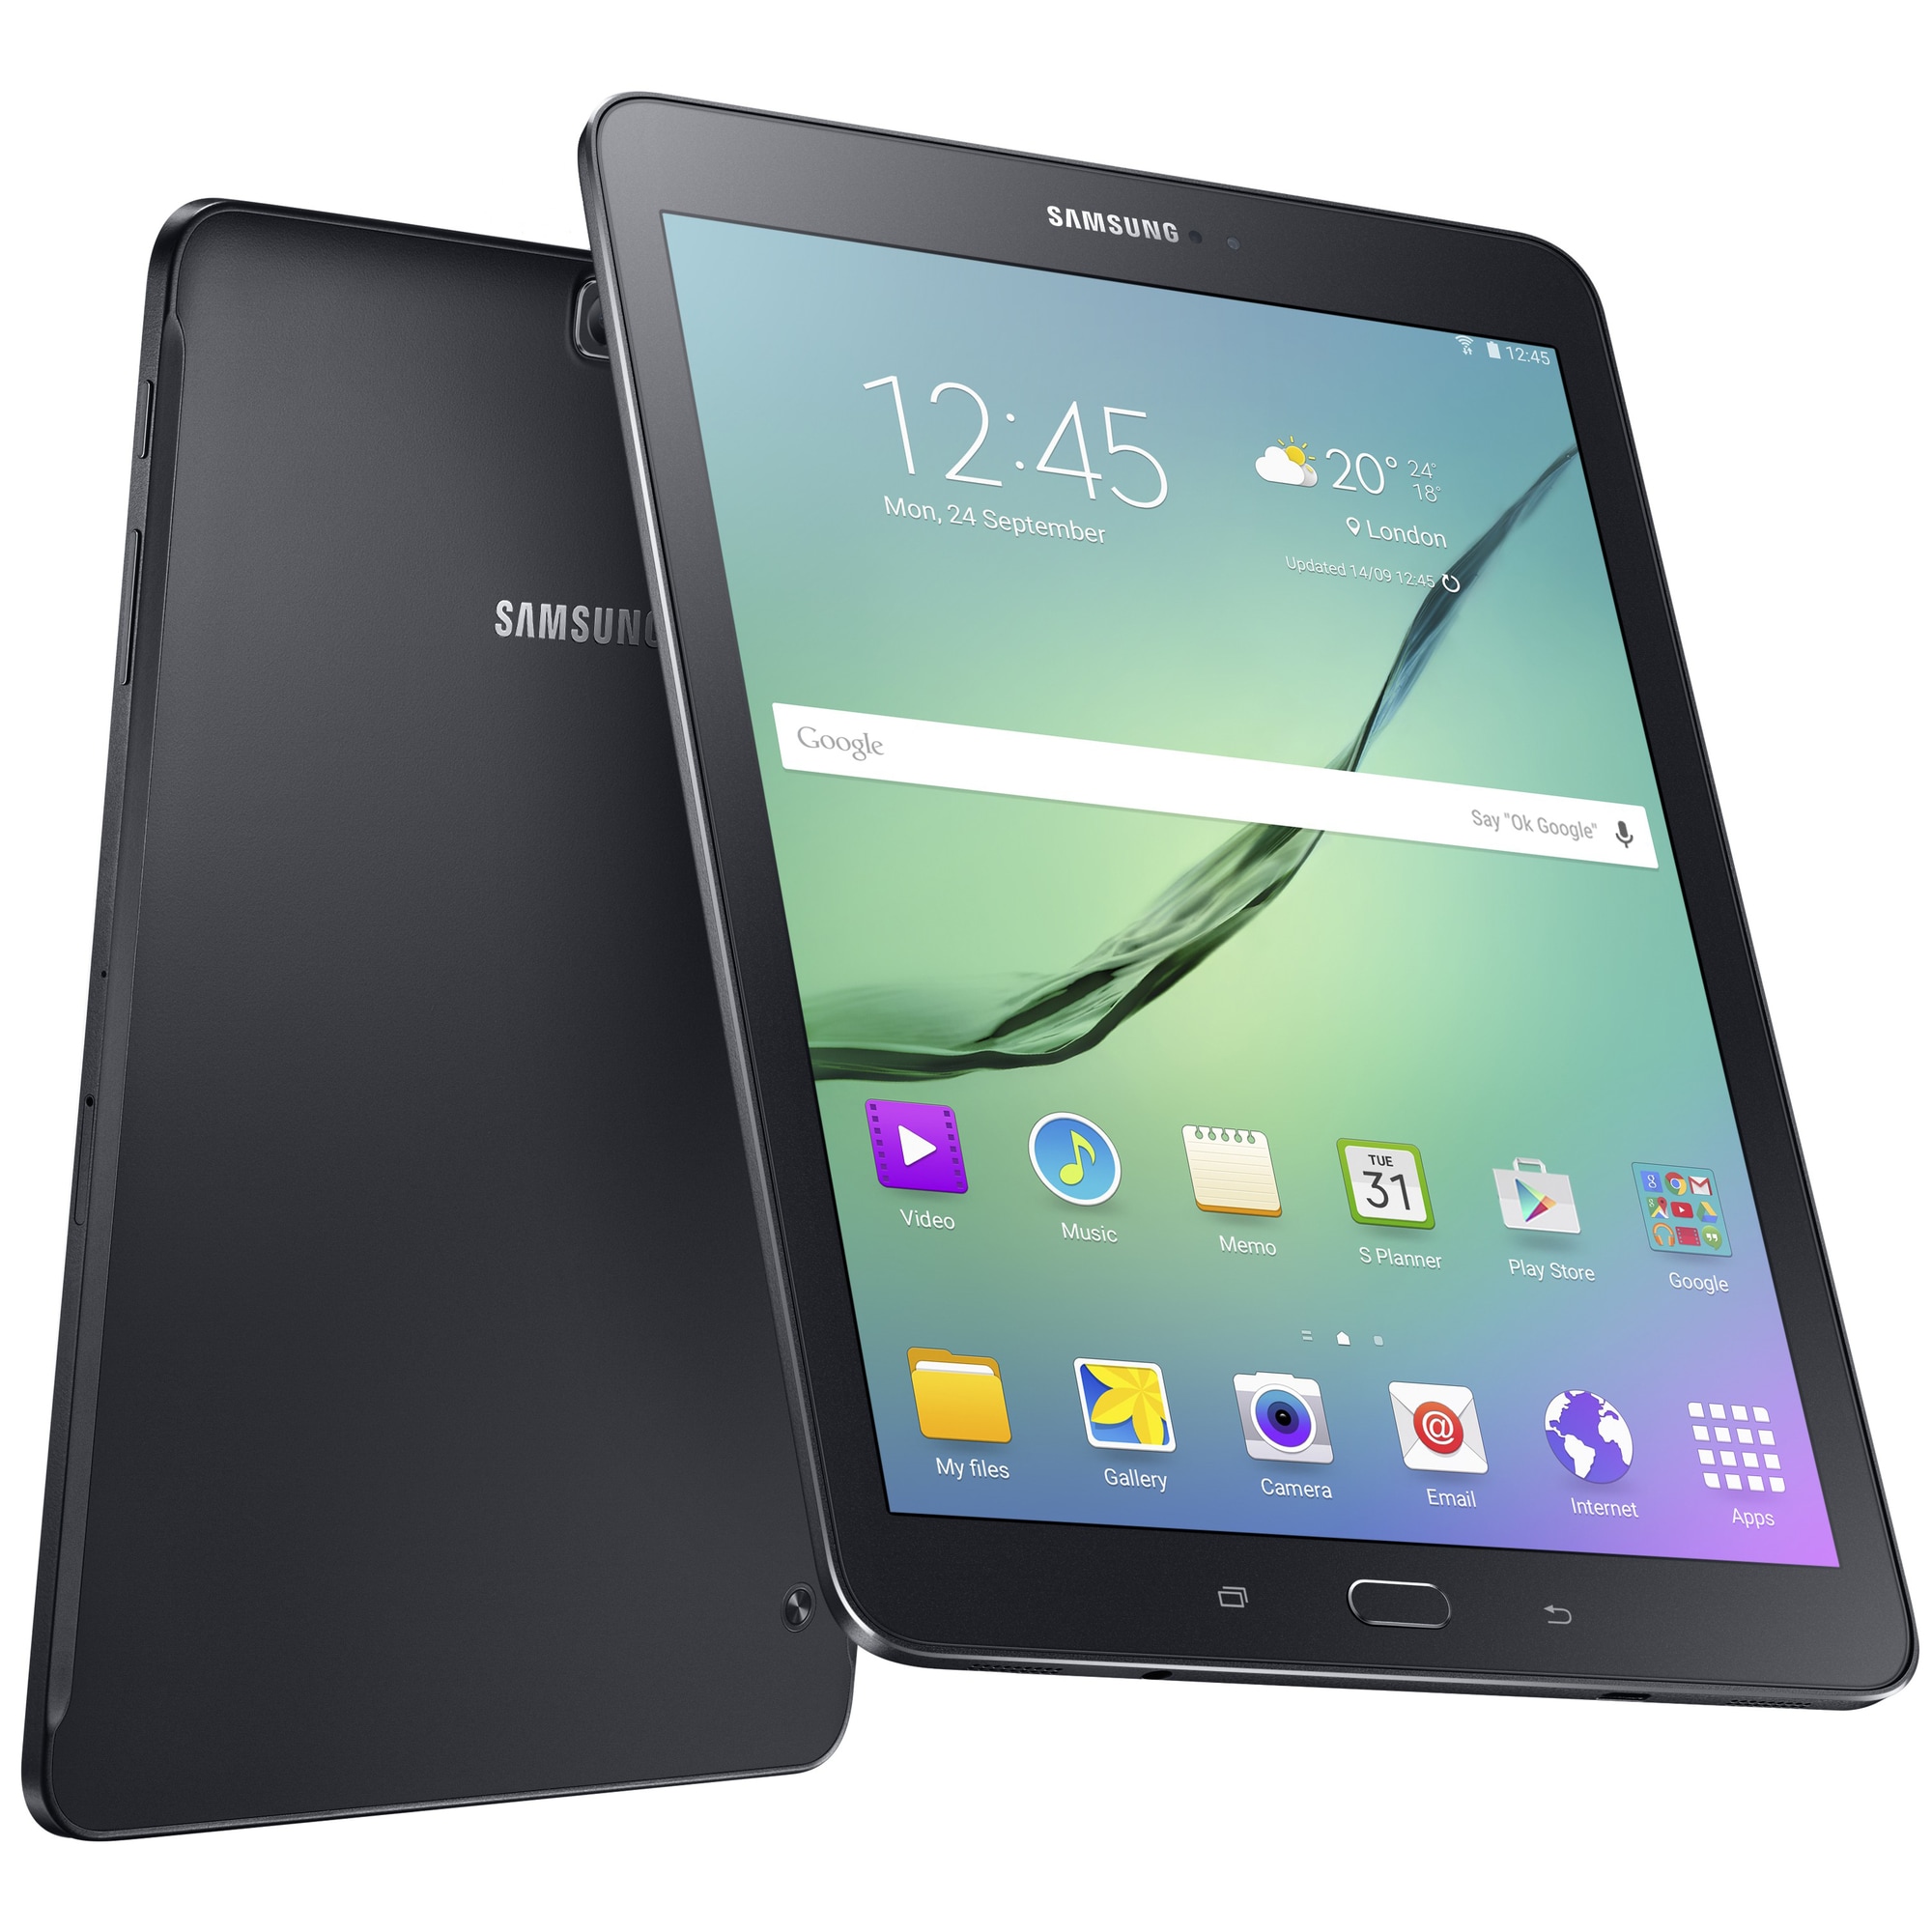 Samsung Galaxy Tab S2 9,7" WiFi 2016 Ed. (svart) - Elgiganten